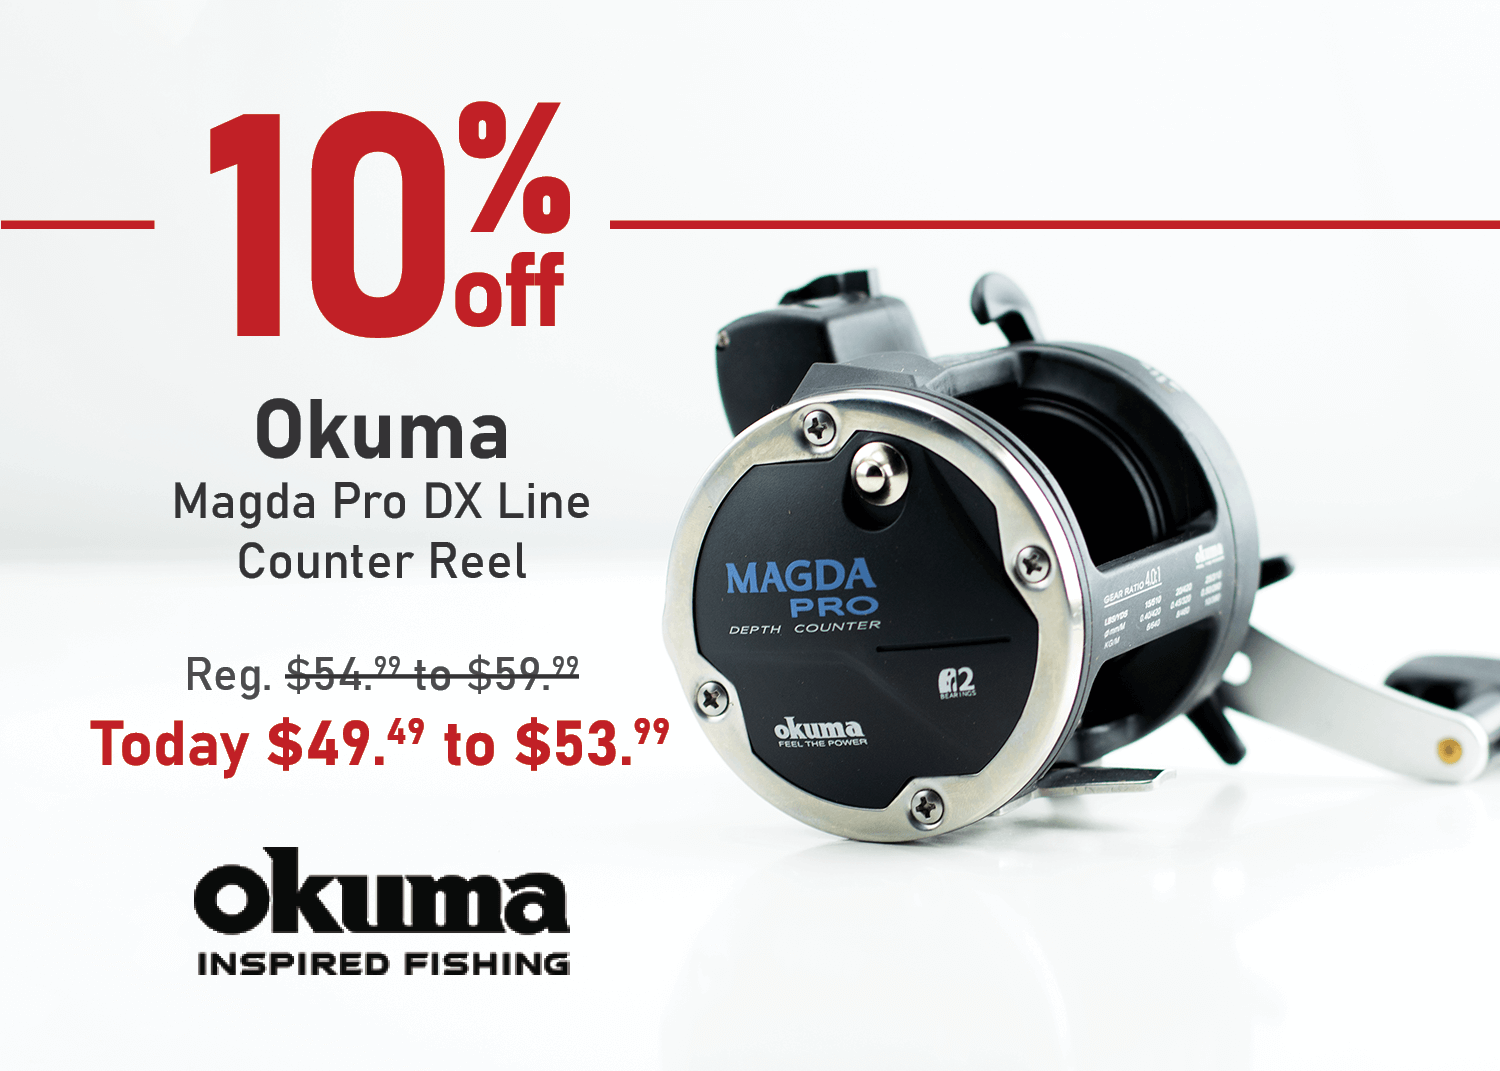 Save 10% on the Okuma Magda Pro DX Line Counter Reel